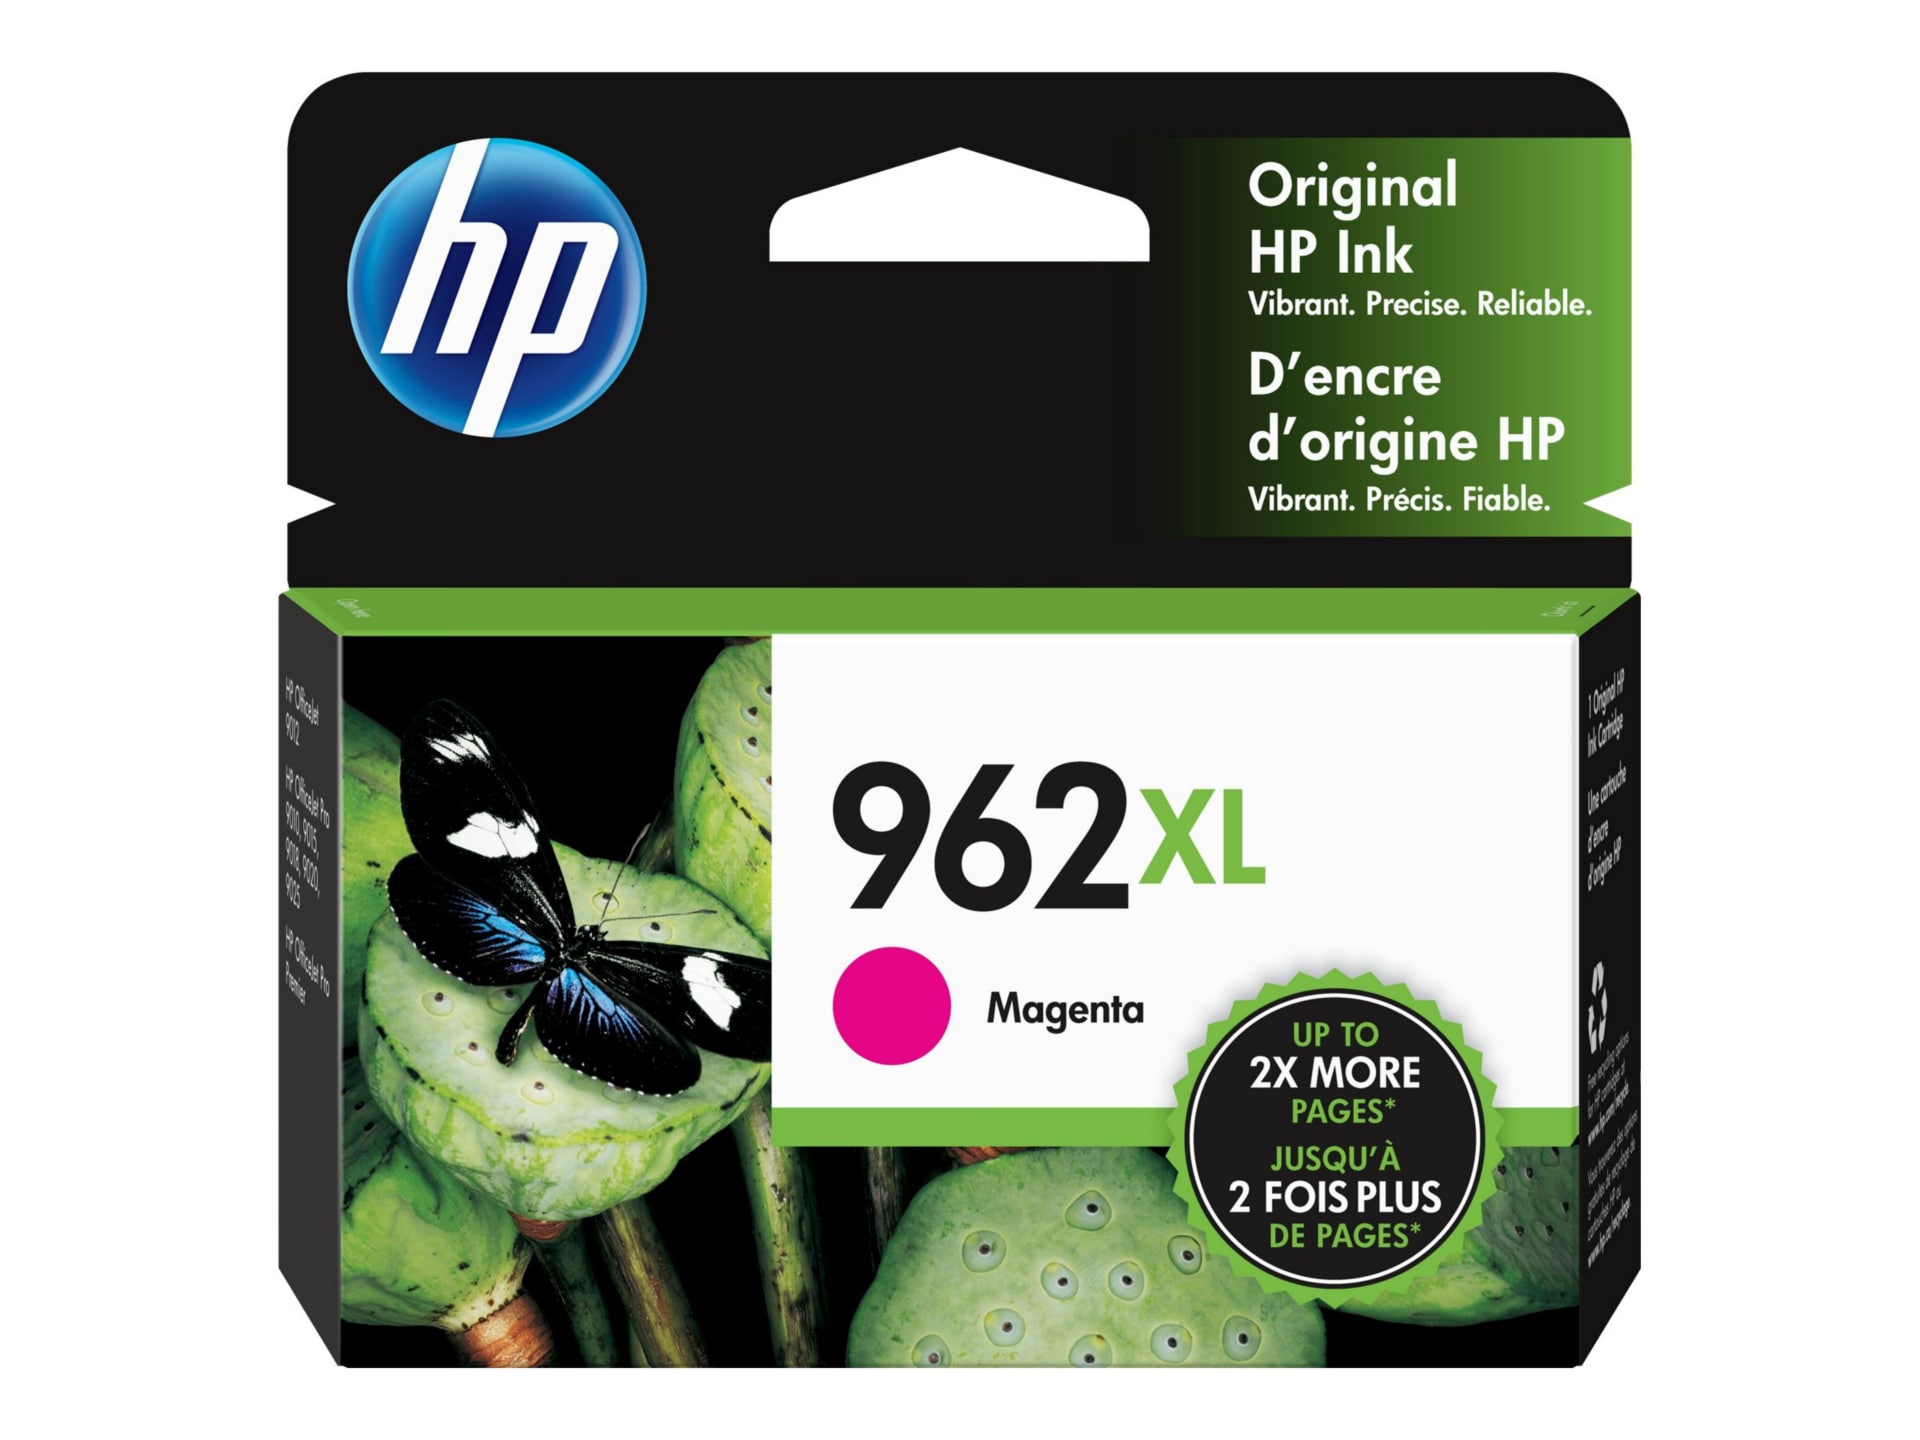 HP 962XL Original High Yield Inkjet Ink Cartridge - Magenta - 1 Each